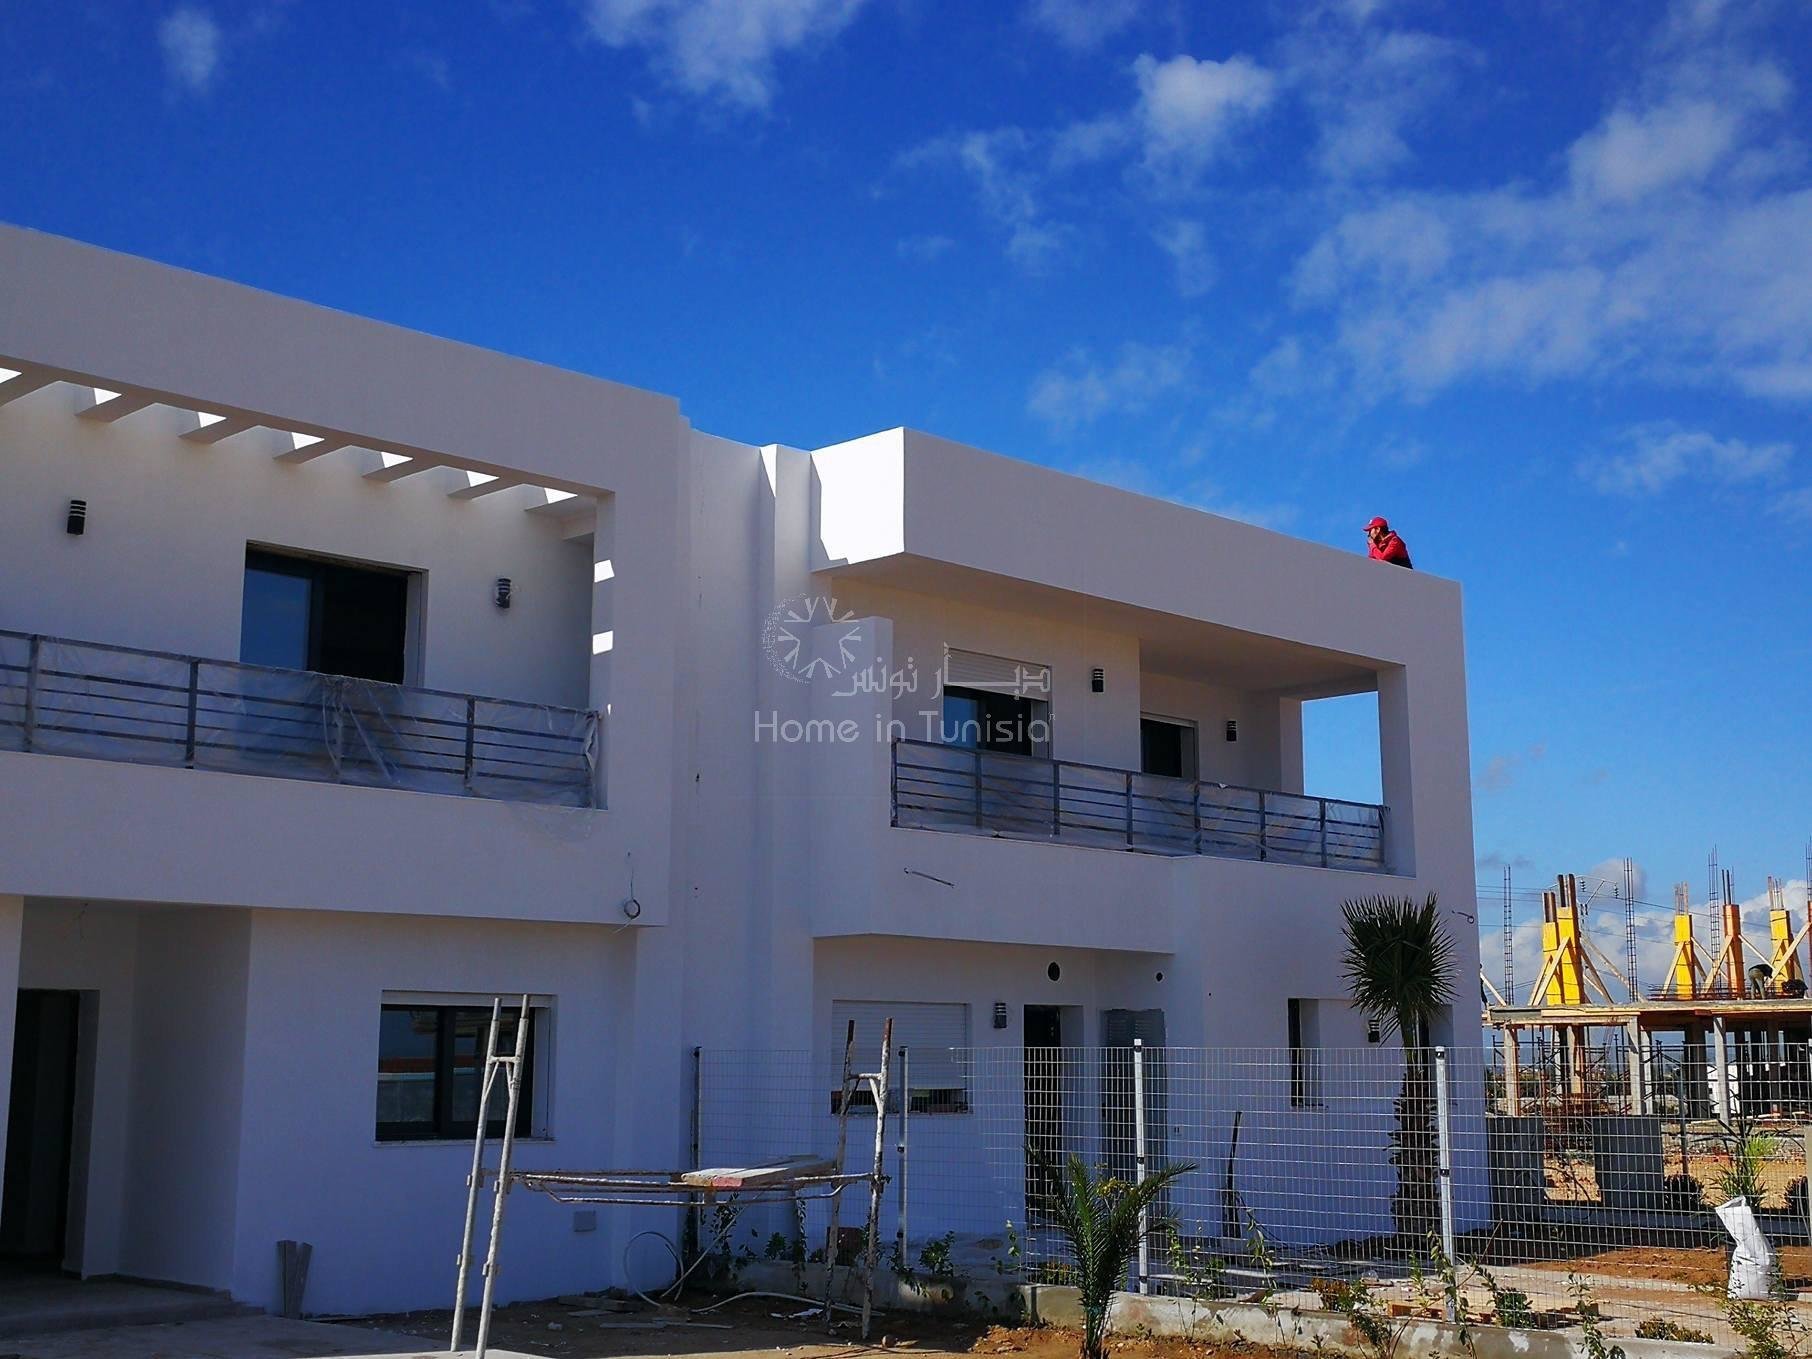 Tunis Bay résidentiel golf villa Oceanos jumelée 4 chambres terrasse jardin piscine privee